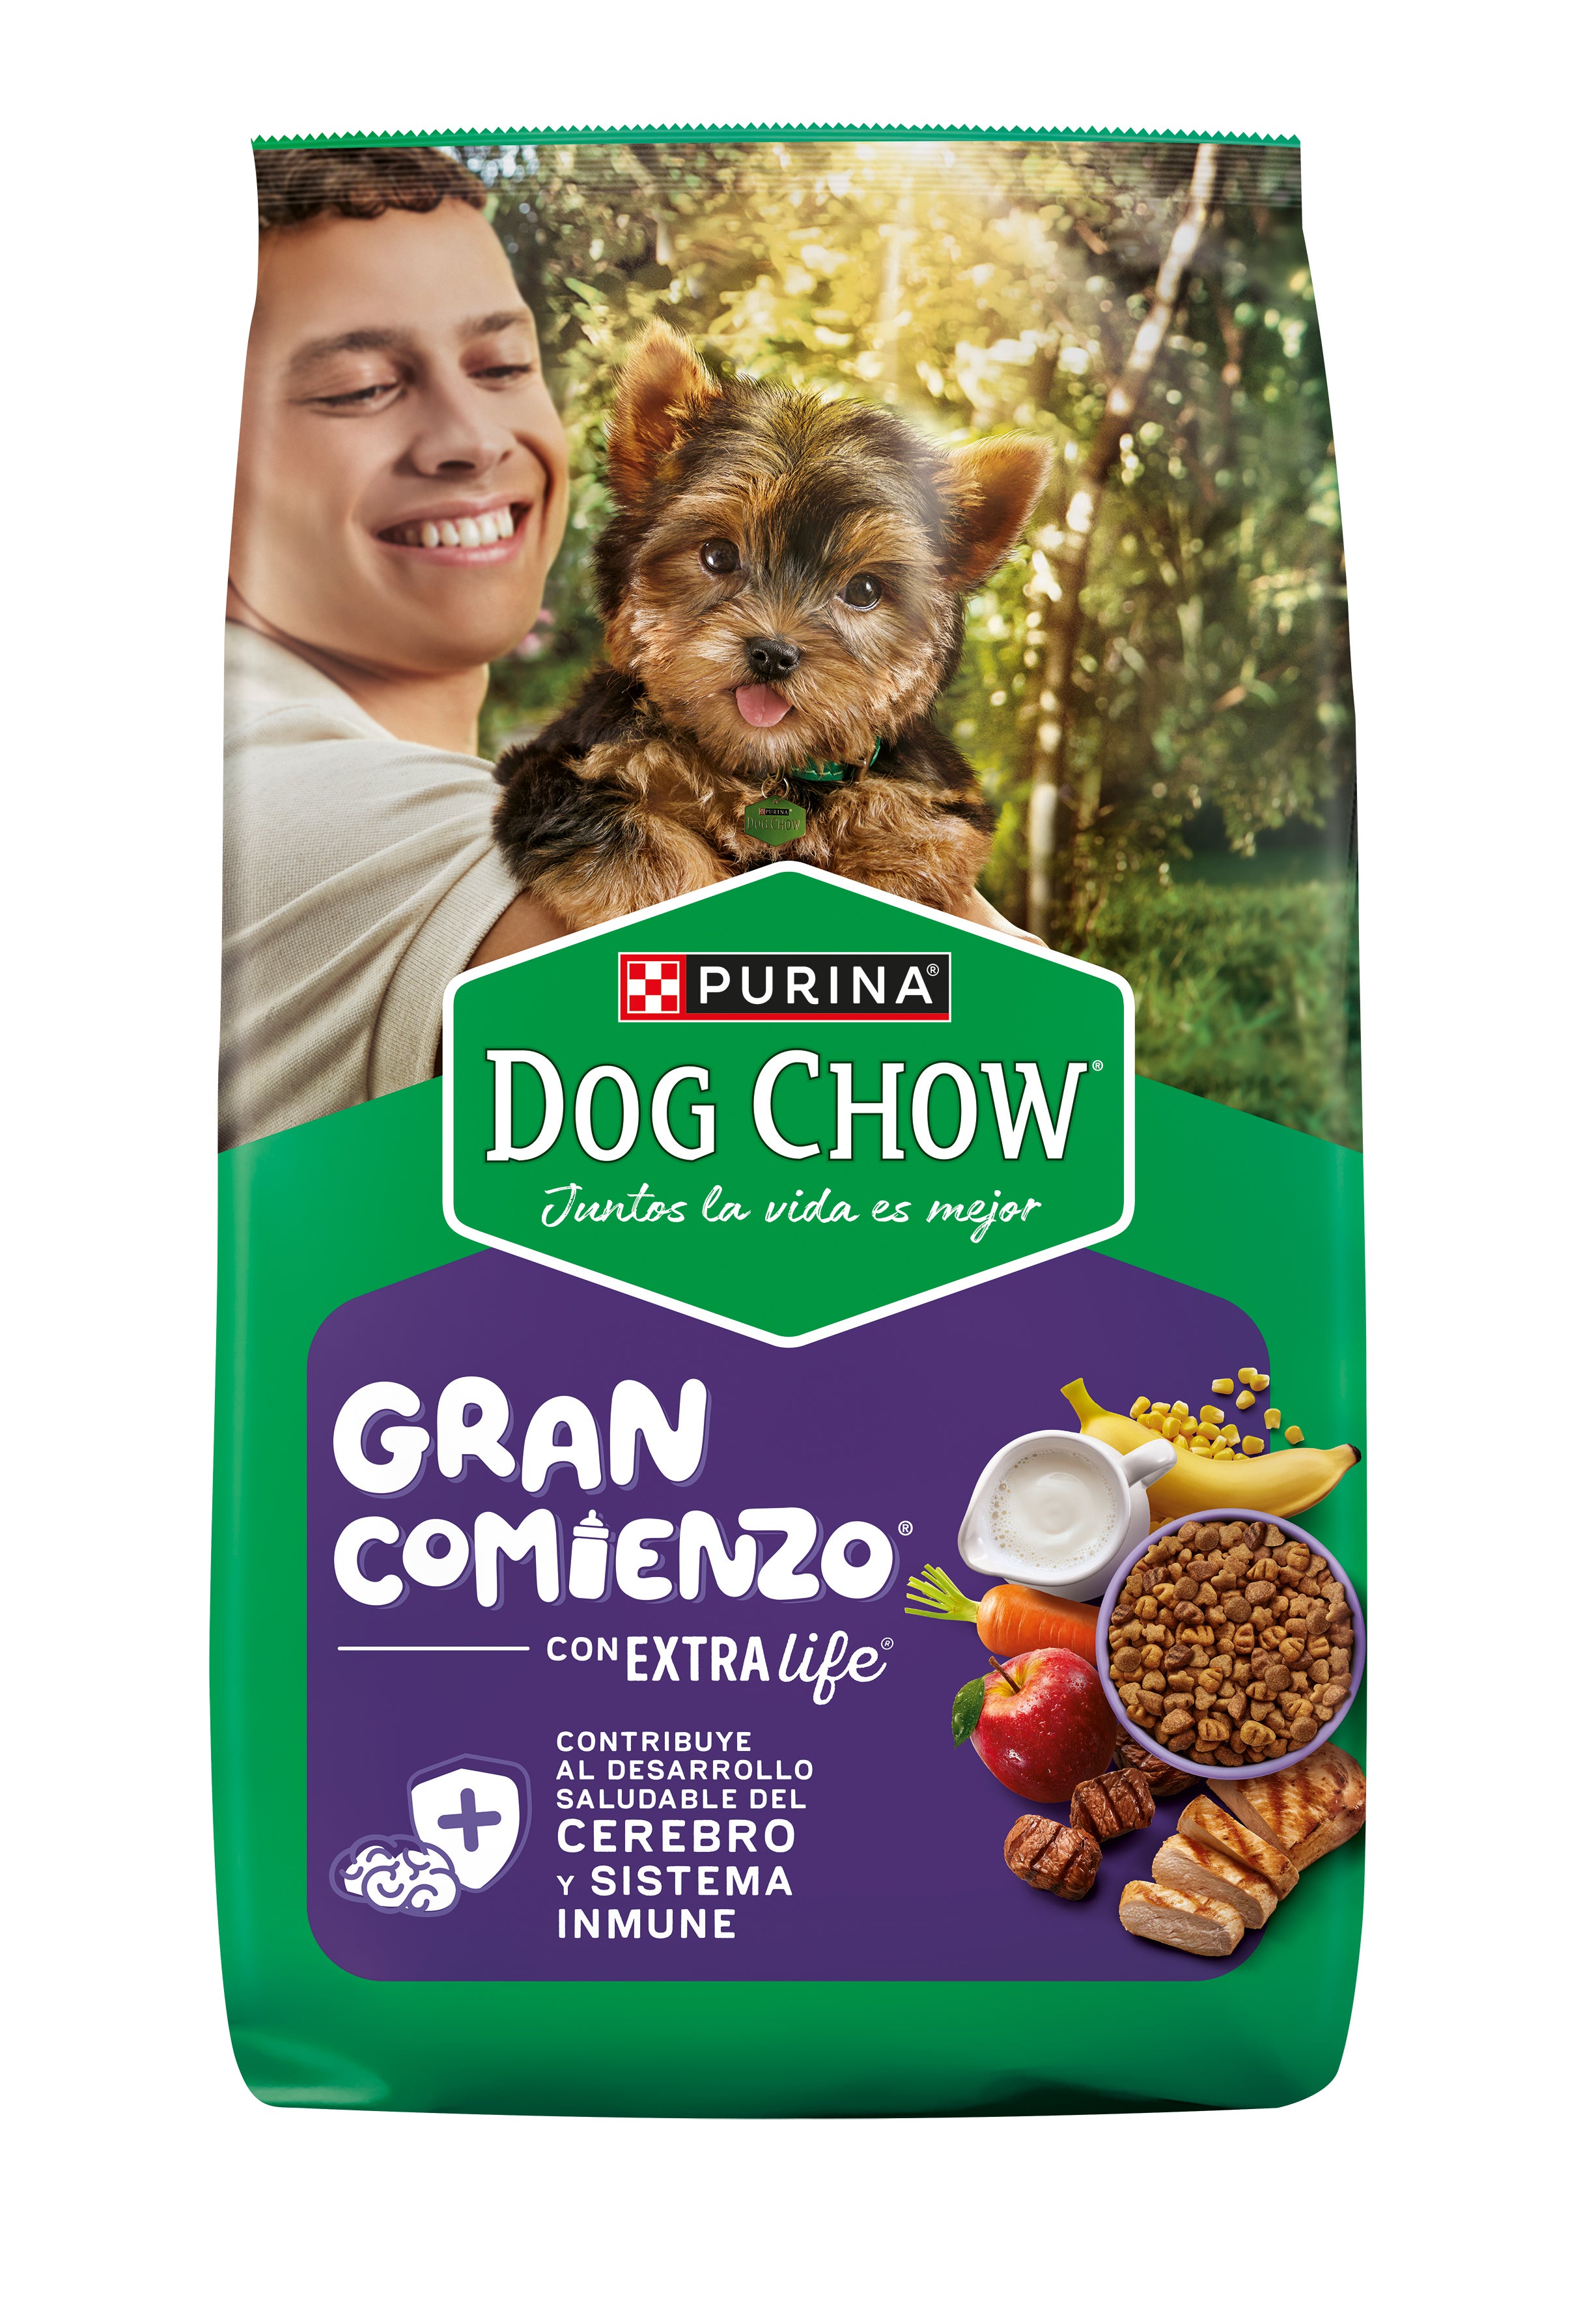 Dog Chow Gran comienzo